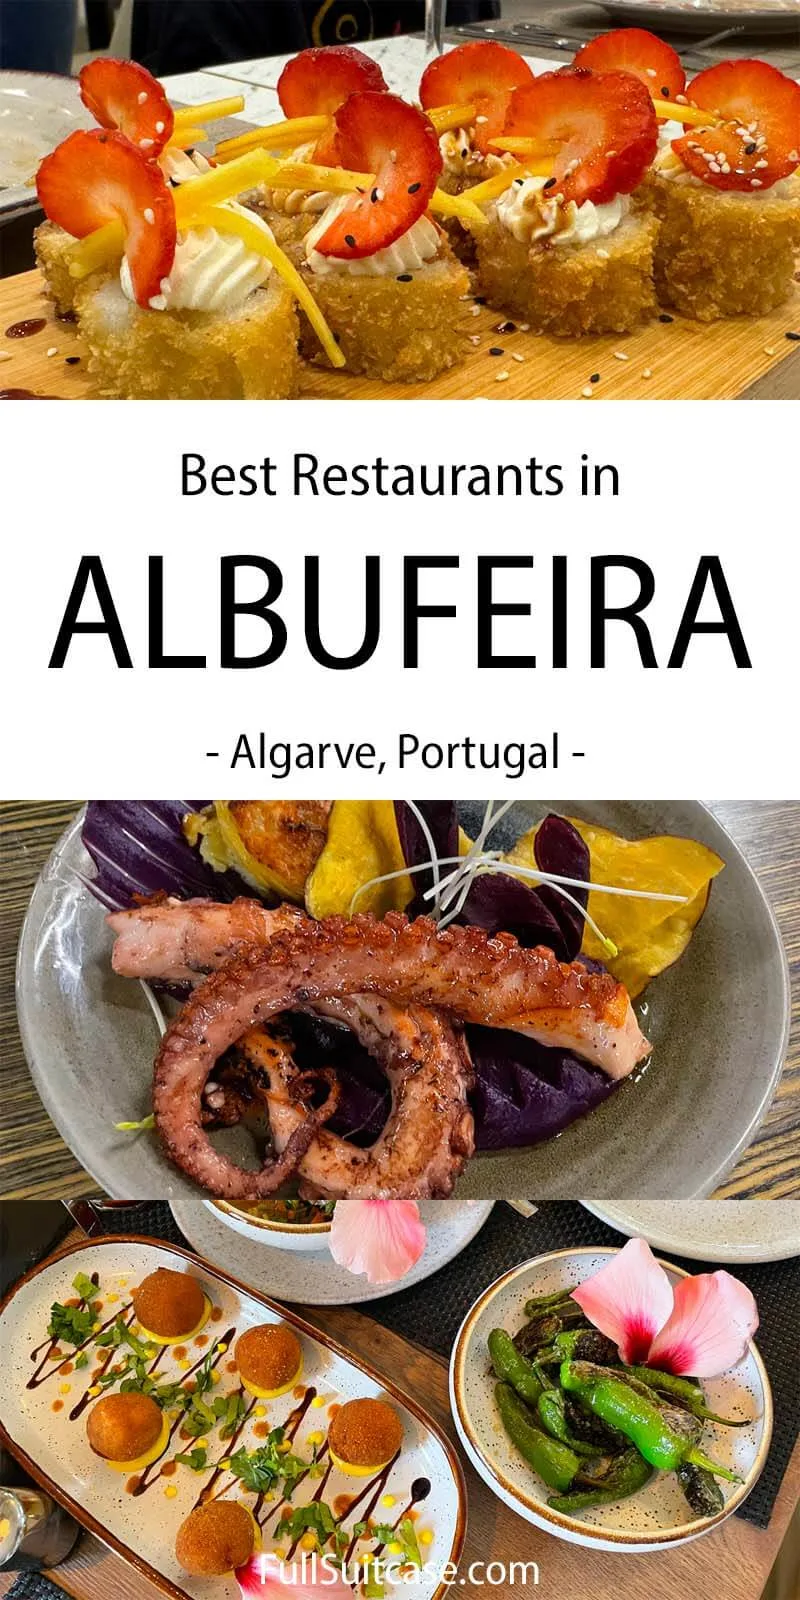 Best restaurants in Albufeira (Algarve Portugal)